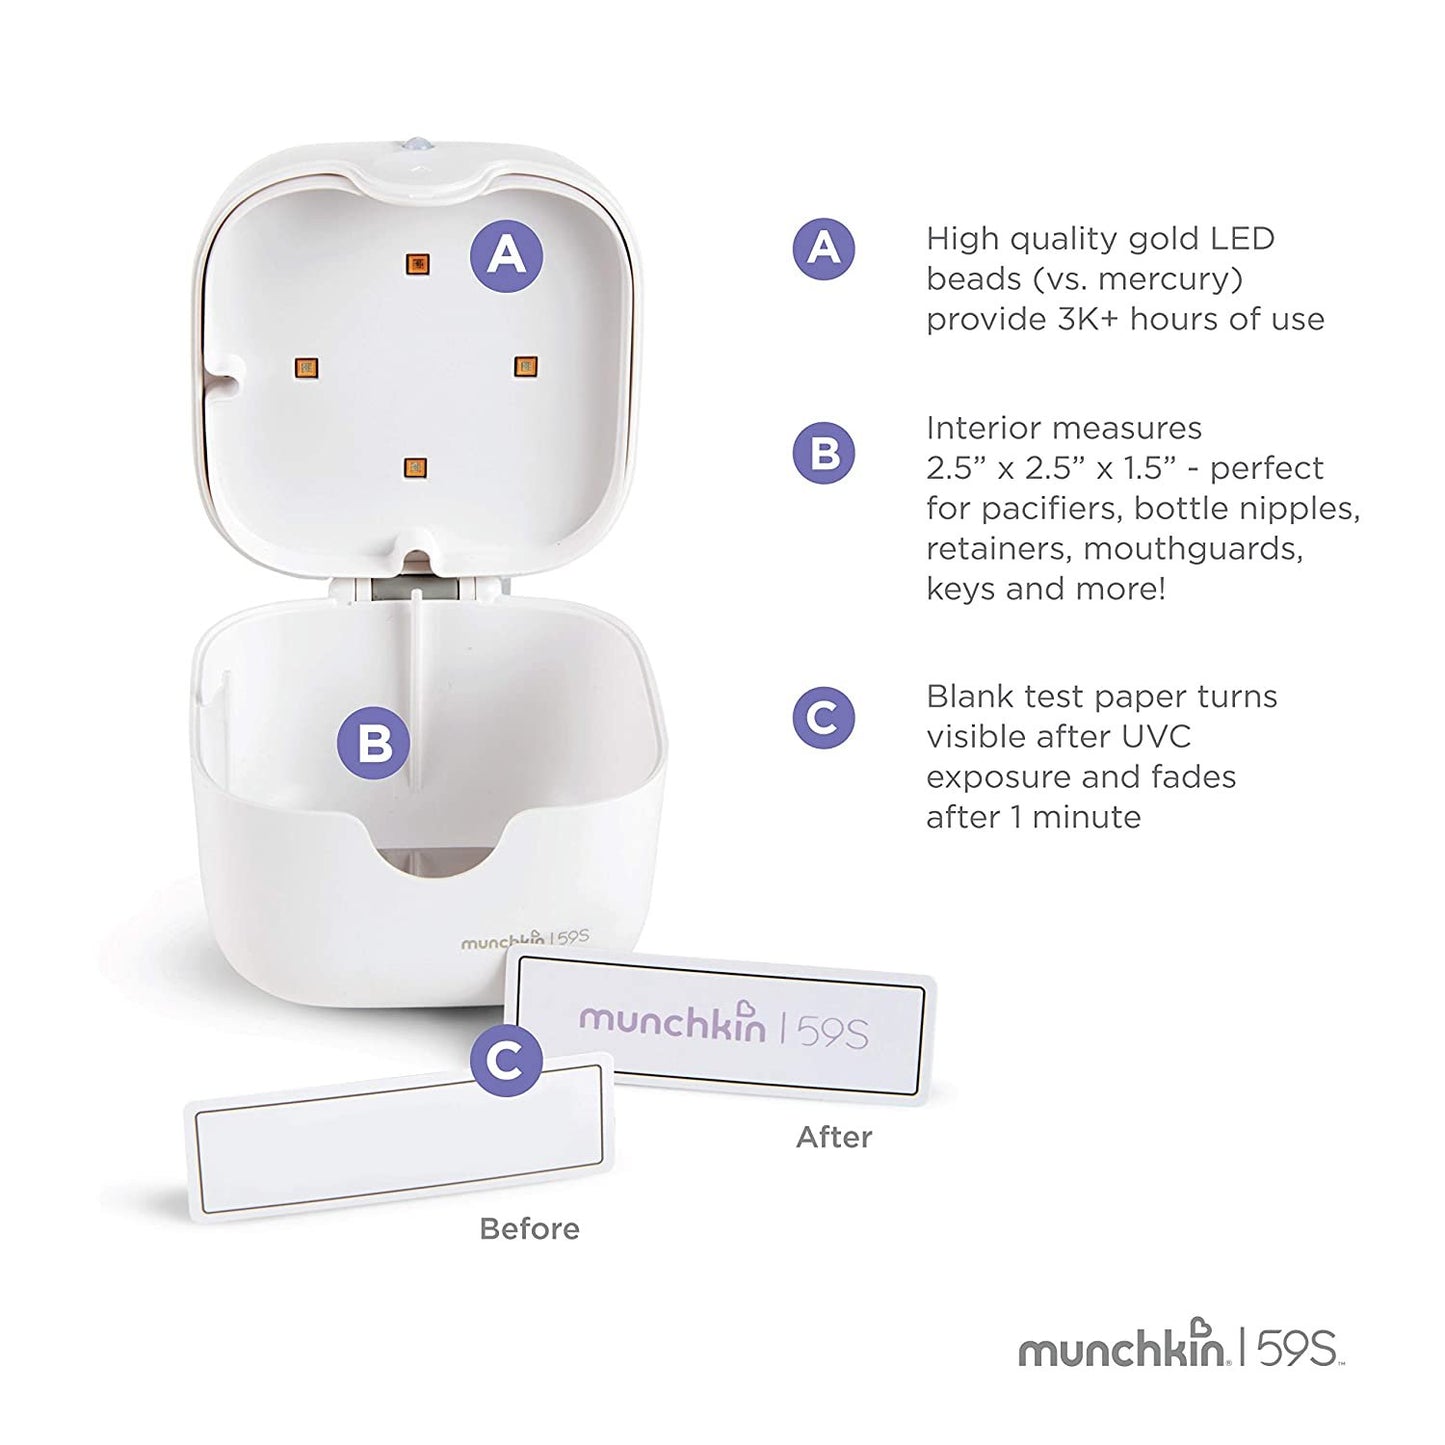 Munchkin Portable UV Sterilizer, Kills 99.99% of Germs in 59 Seconds, White, Mini UV Light Sanitizer Box